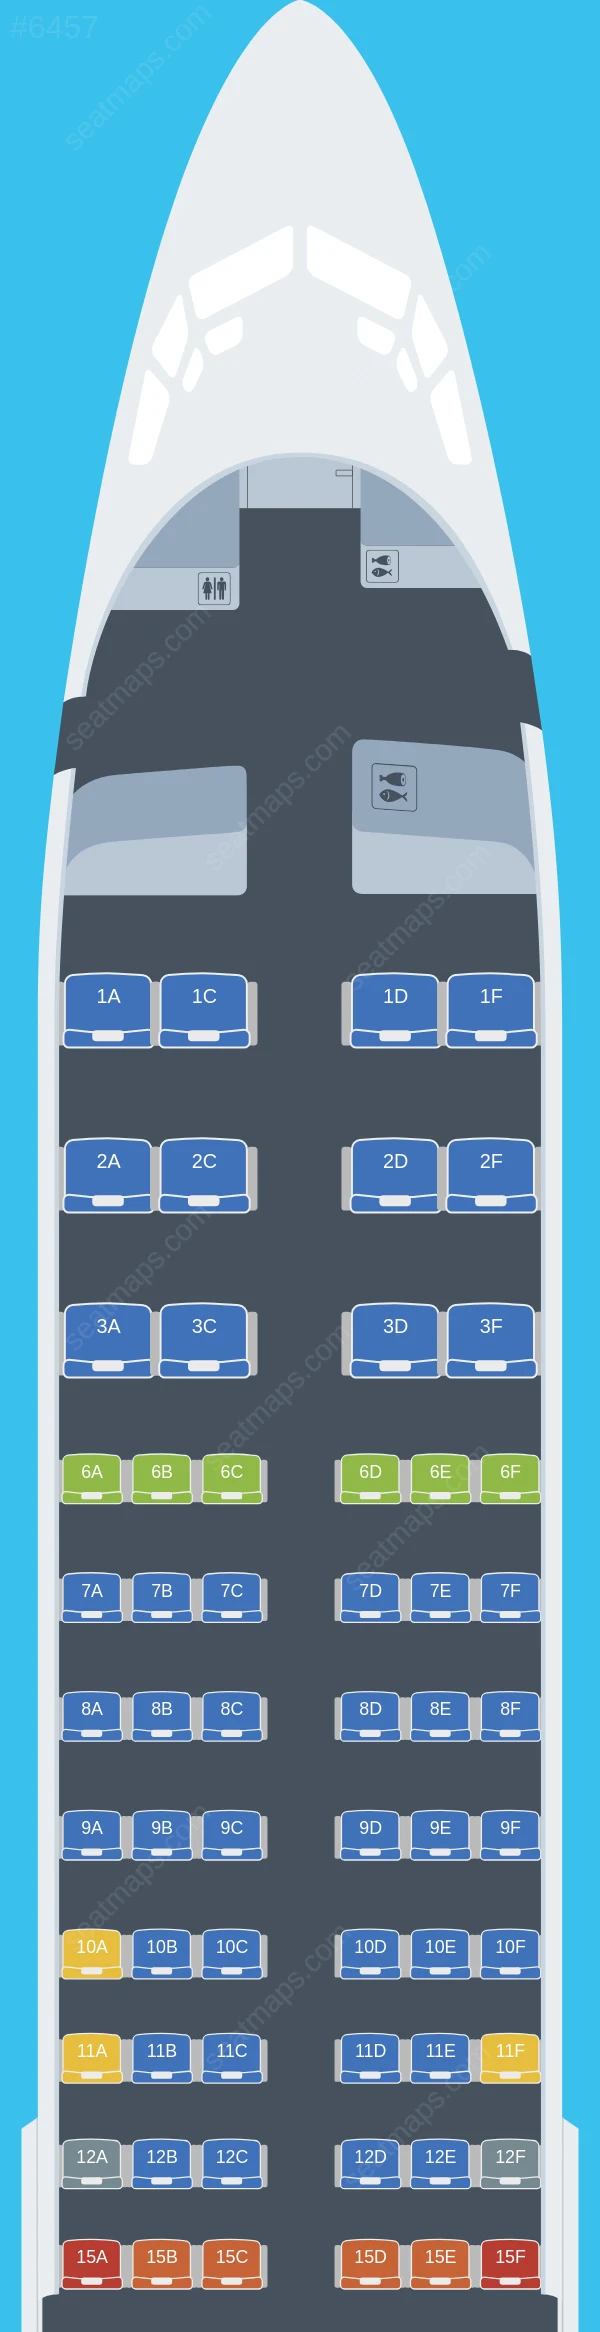 Alaska Airlines Premium Class Seat Map Elcho Table